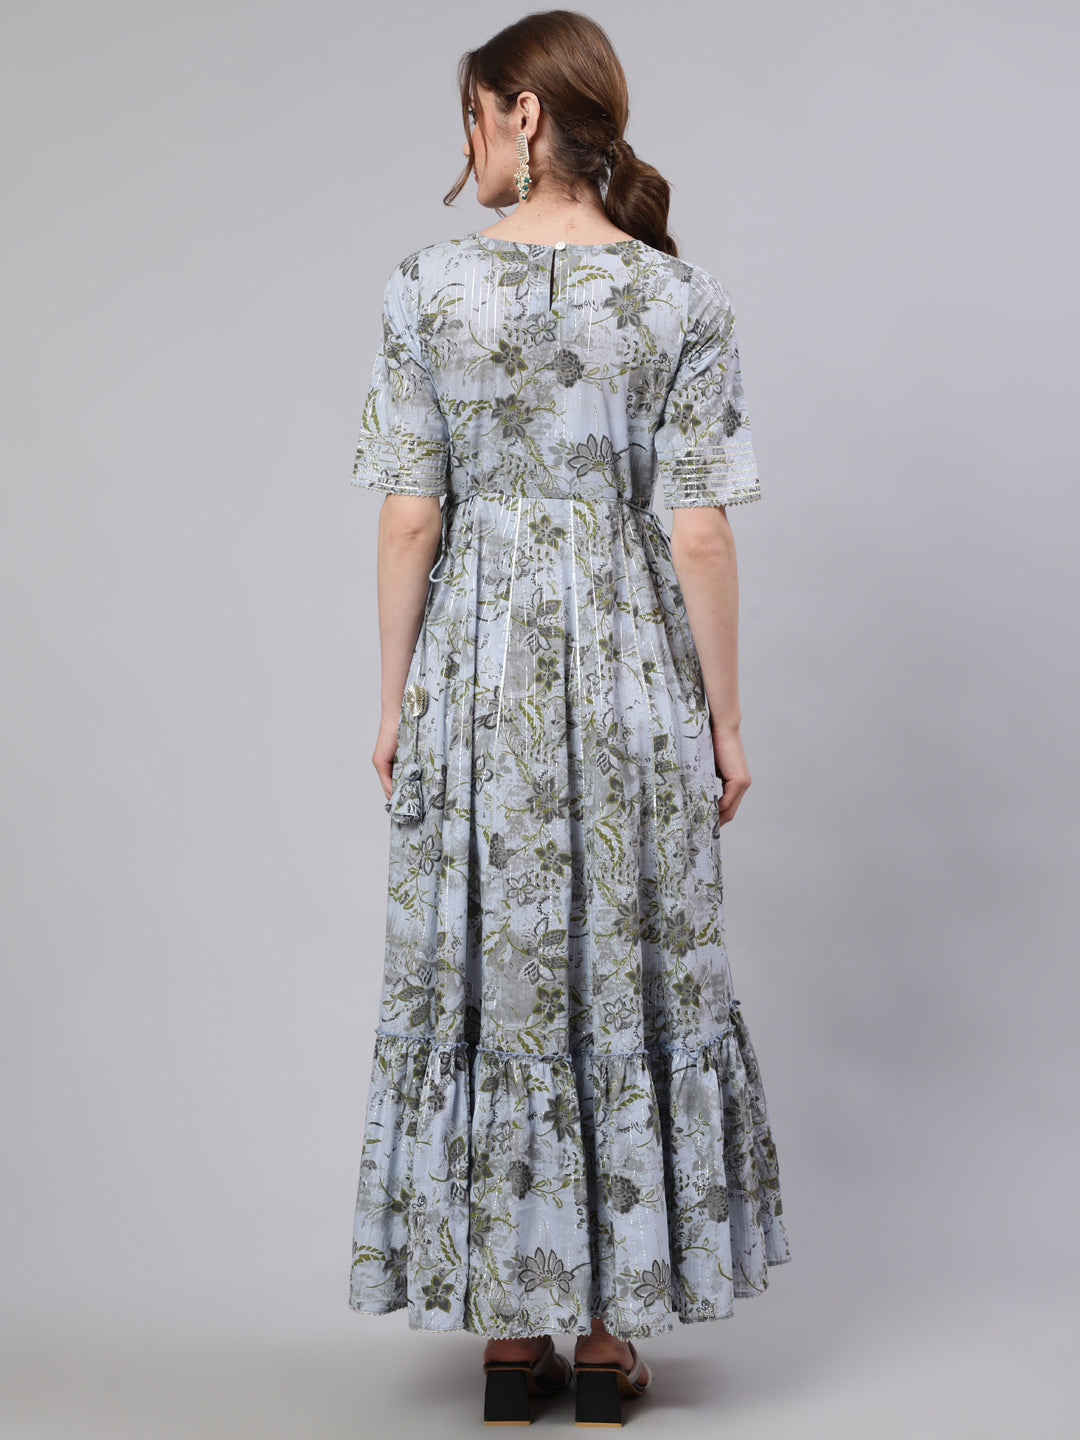 Women's Blue Floral Print Maxi Dress - Aks